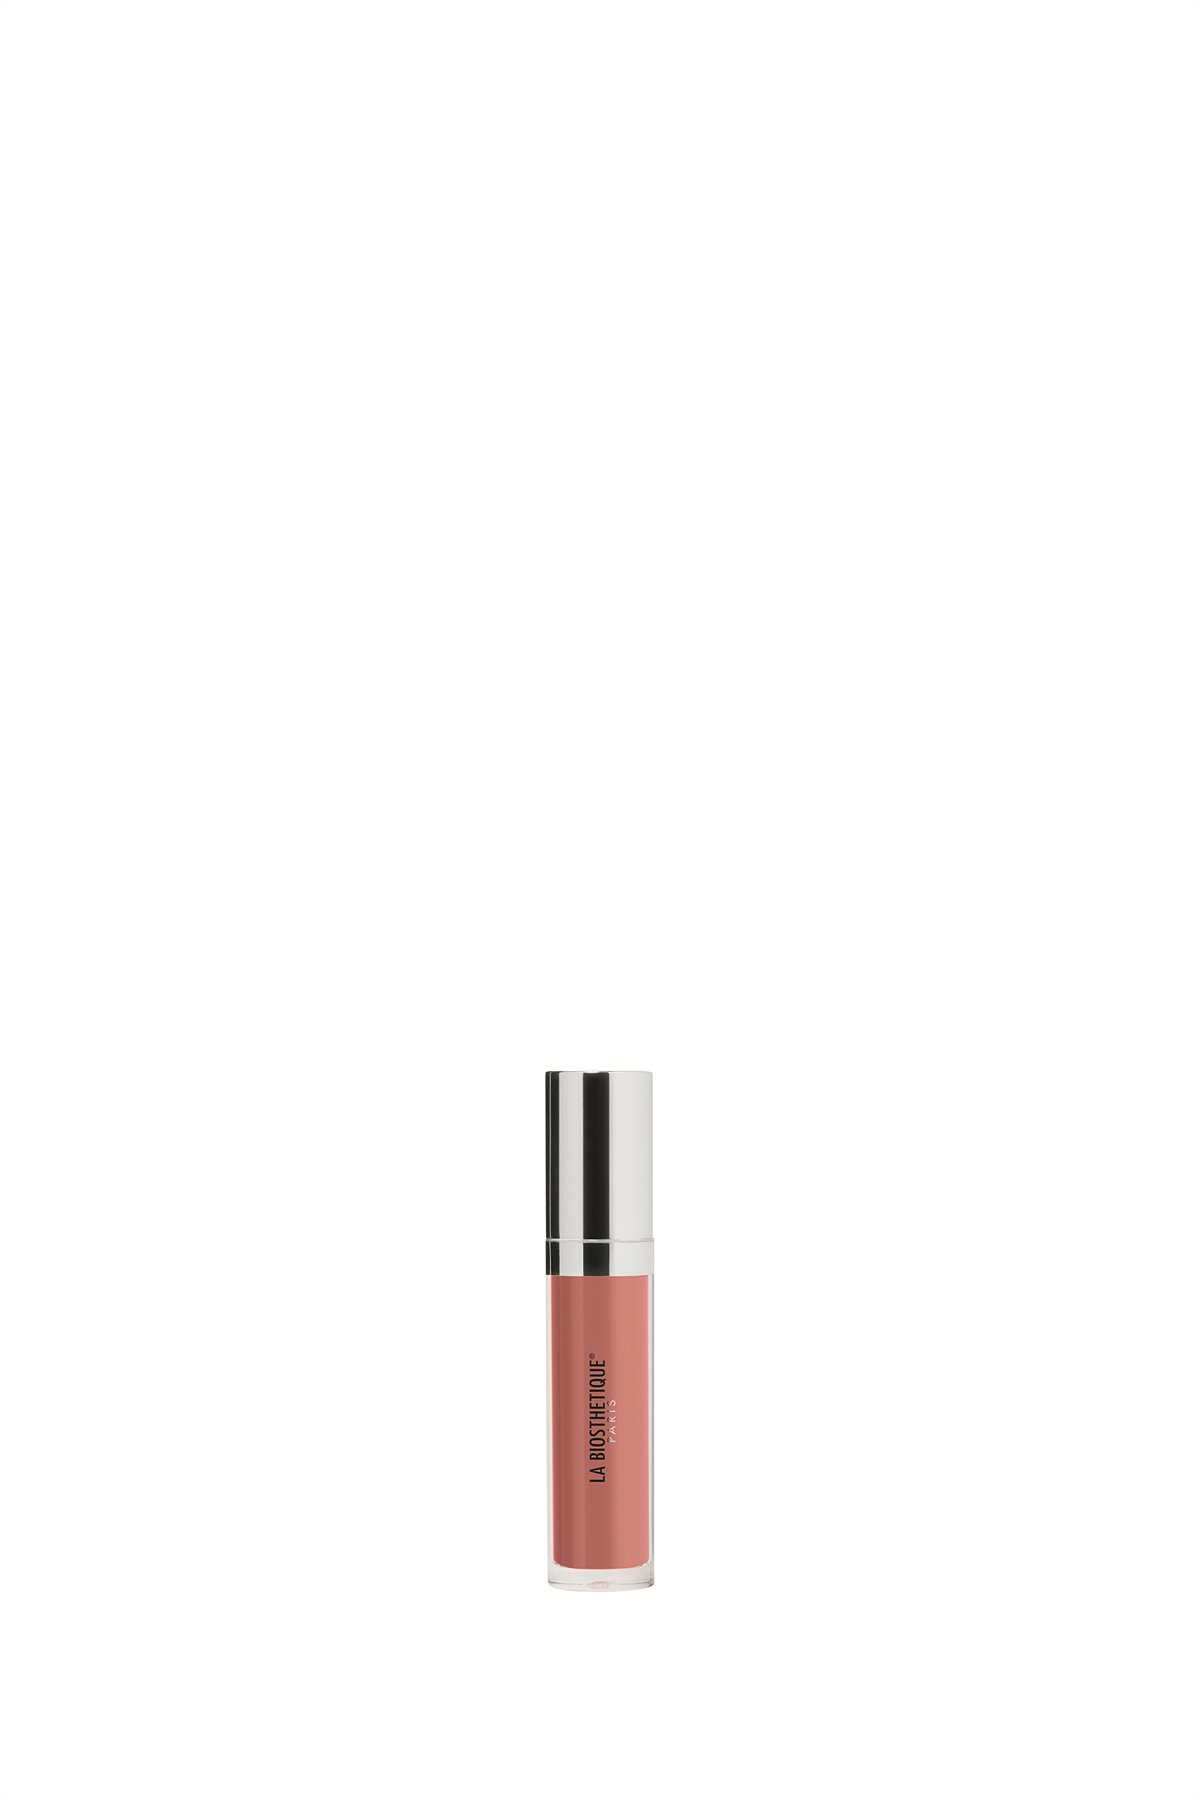 La Biosthétique_Creme-Lipgloss_Cream Gloss Soft Peach_3,5 ml_22.00 €